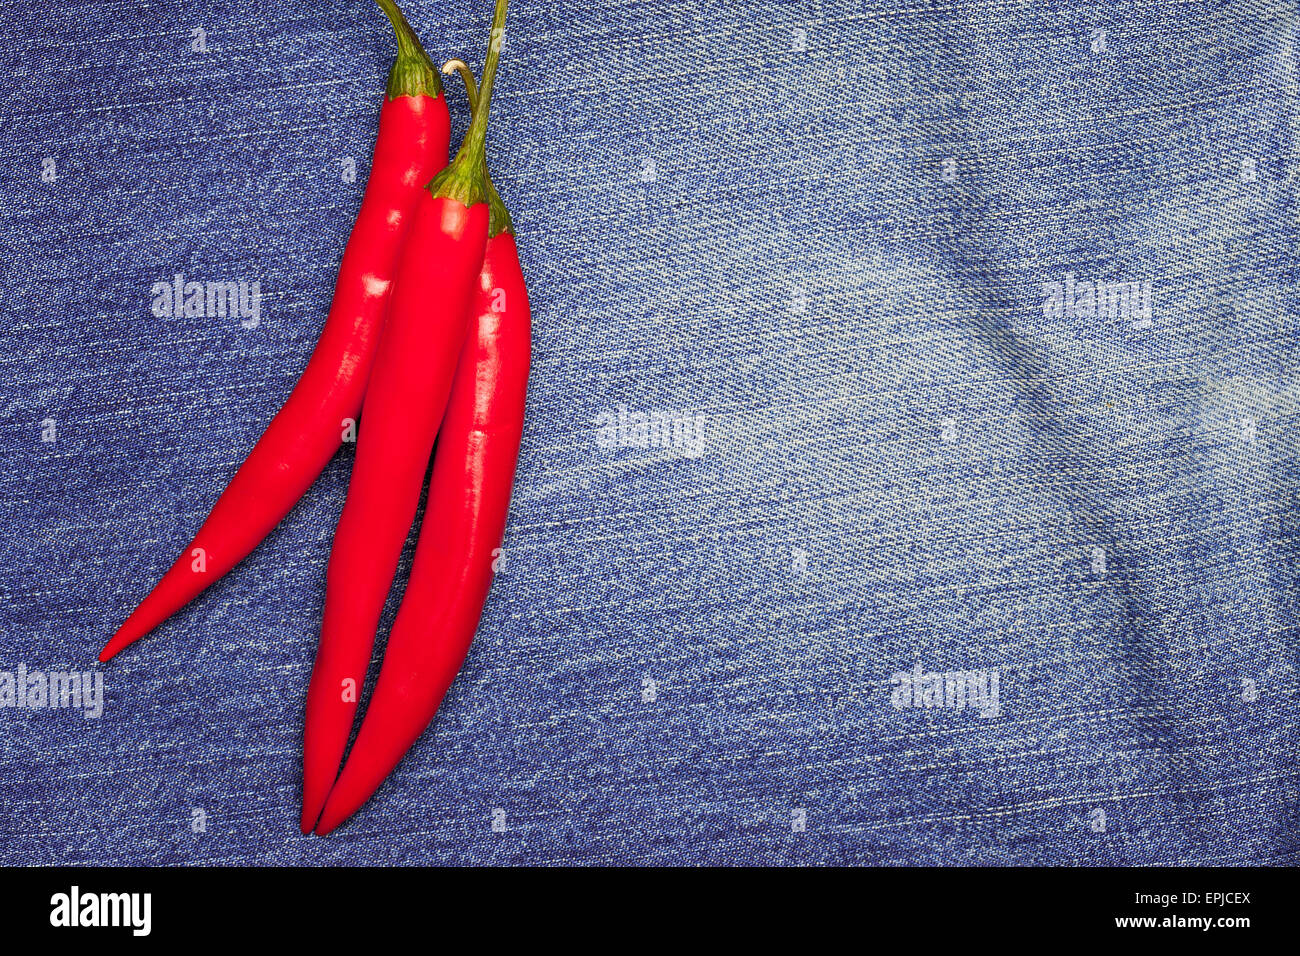 hot Chili peppers auf Jeans Hintergrund Stockfoto